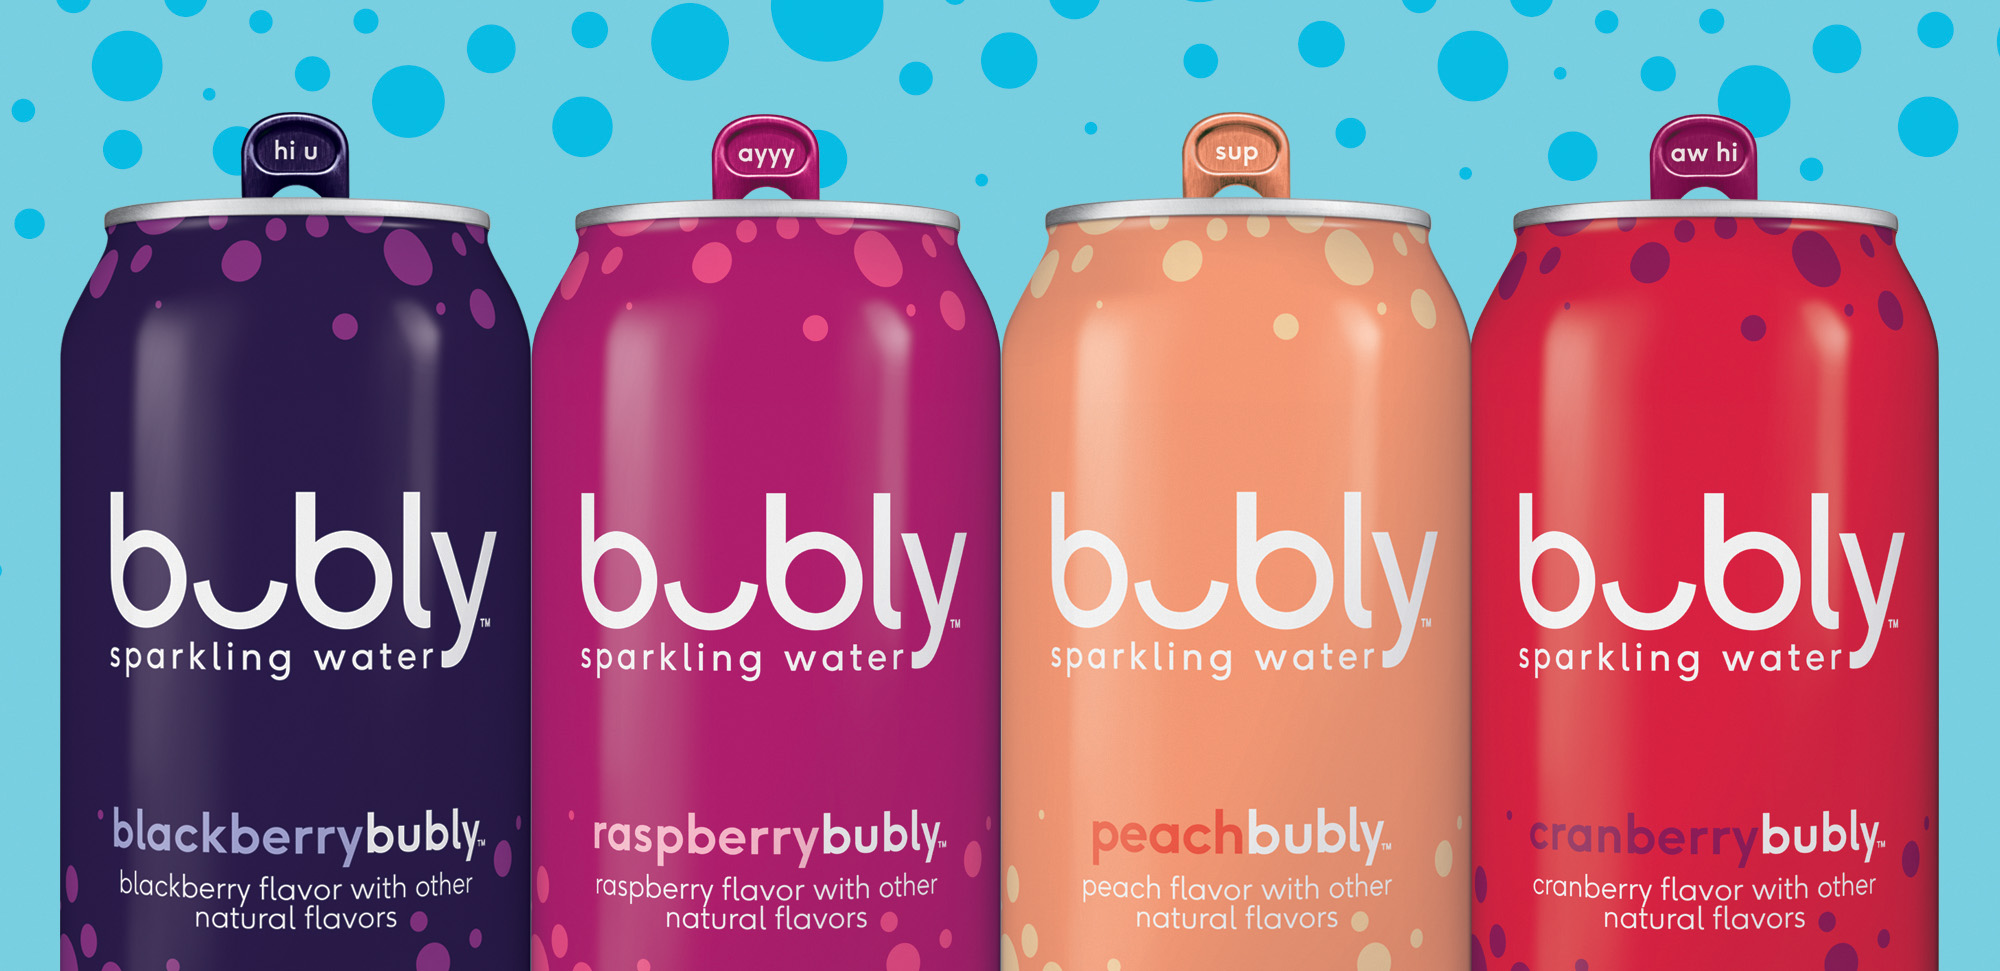 bubly sparkling water debuts four new flavors: blackberrybubly, raspberrybubly, peachbubly, cranberrybubly